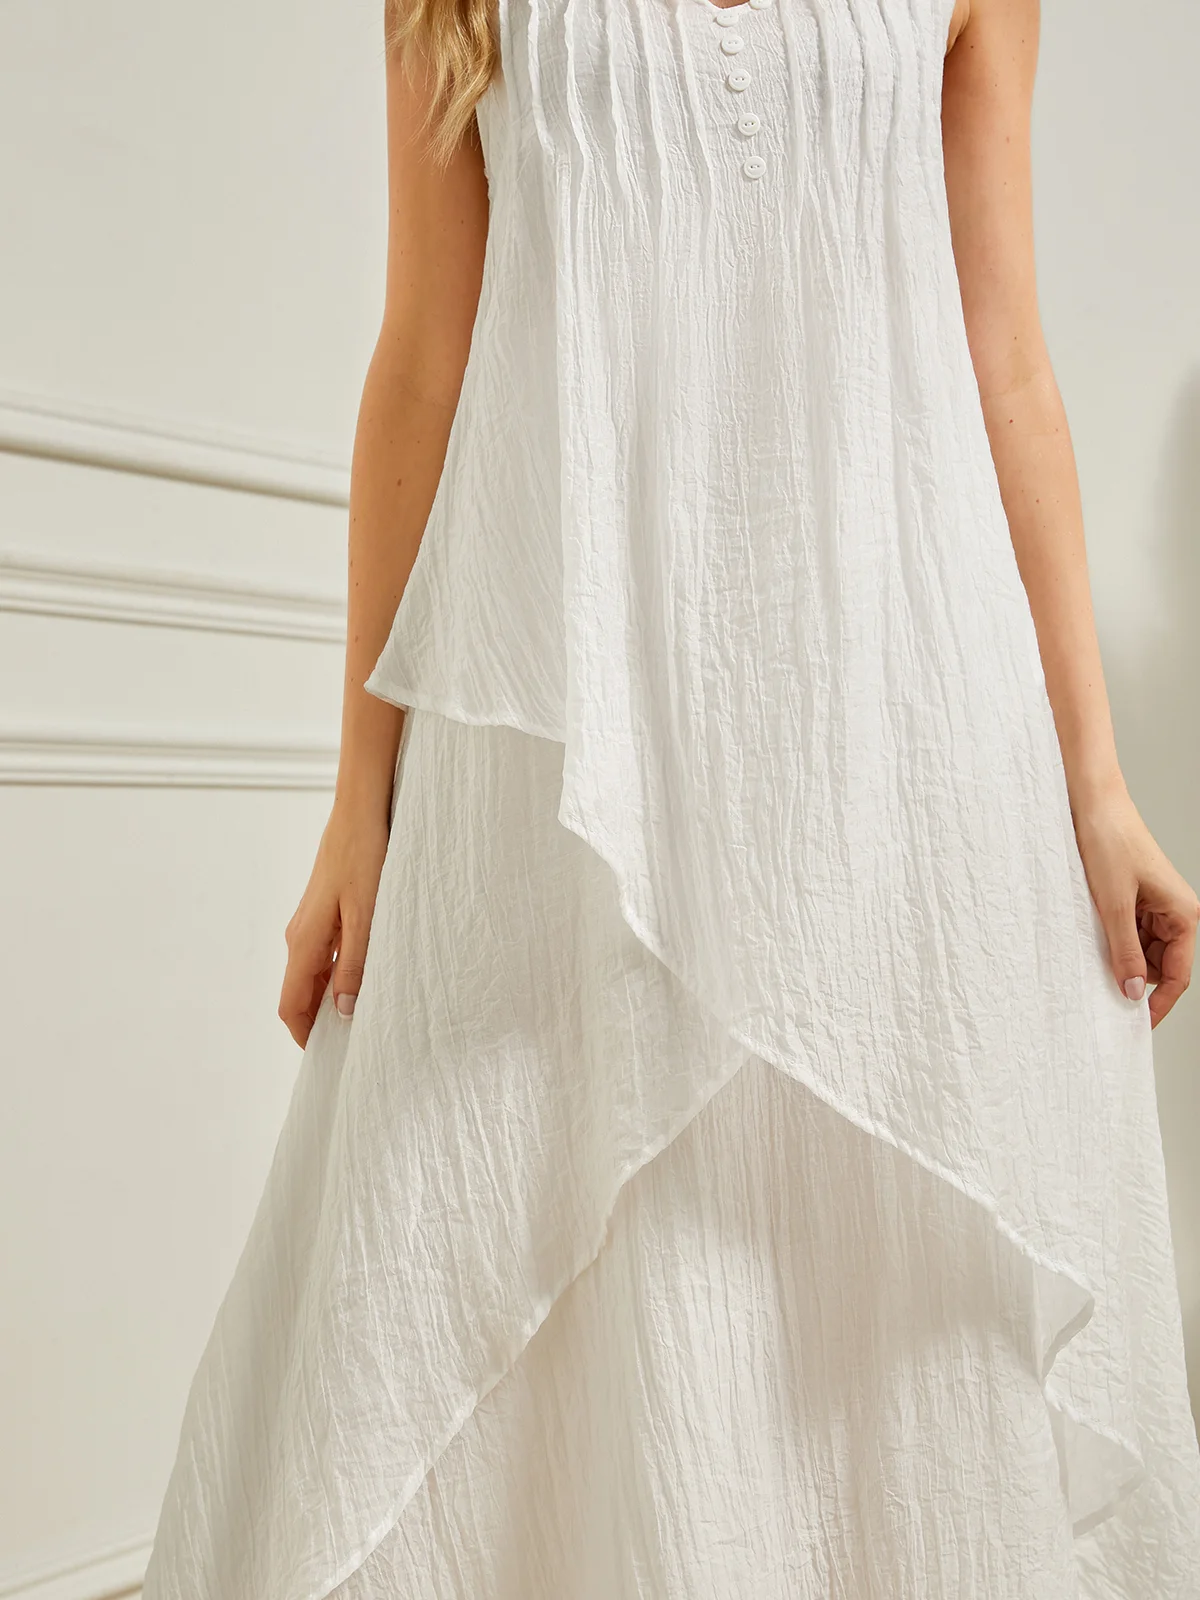 Swing Dress Maxi long Dress Cotton Blend Basic Elegant Outdoor Daily V Neck Button Pocket Sleeveless dresses